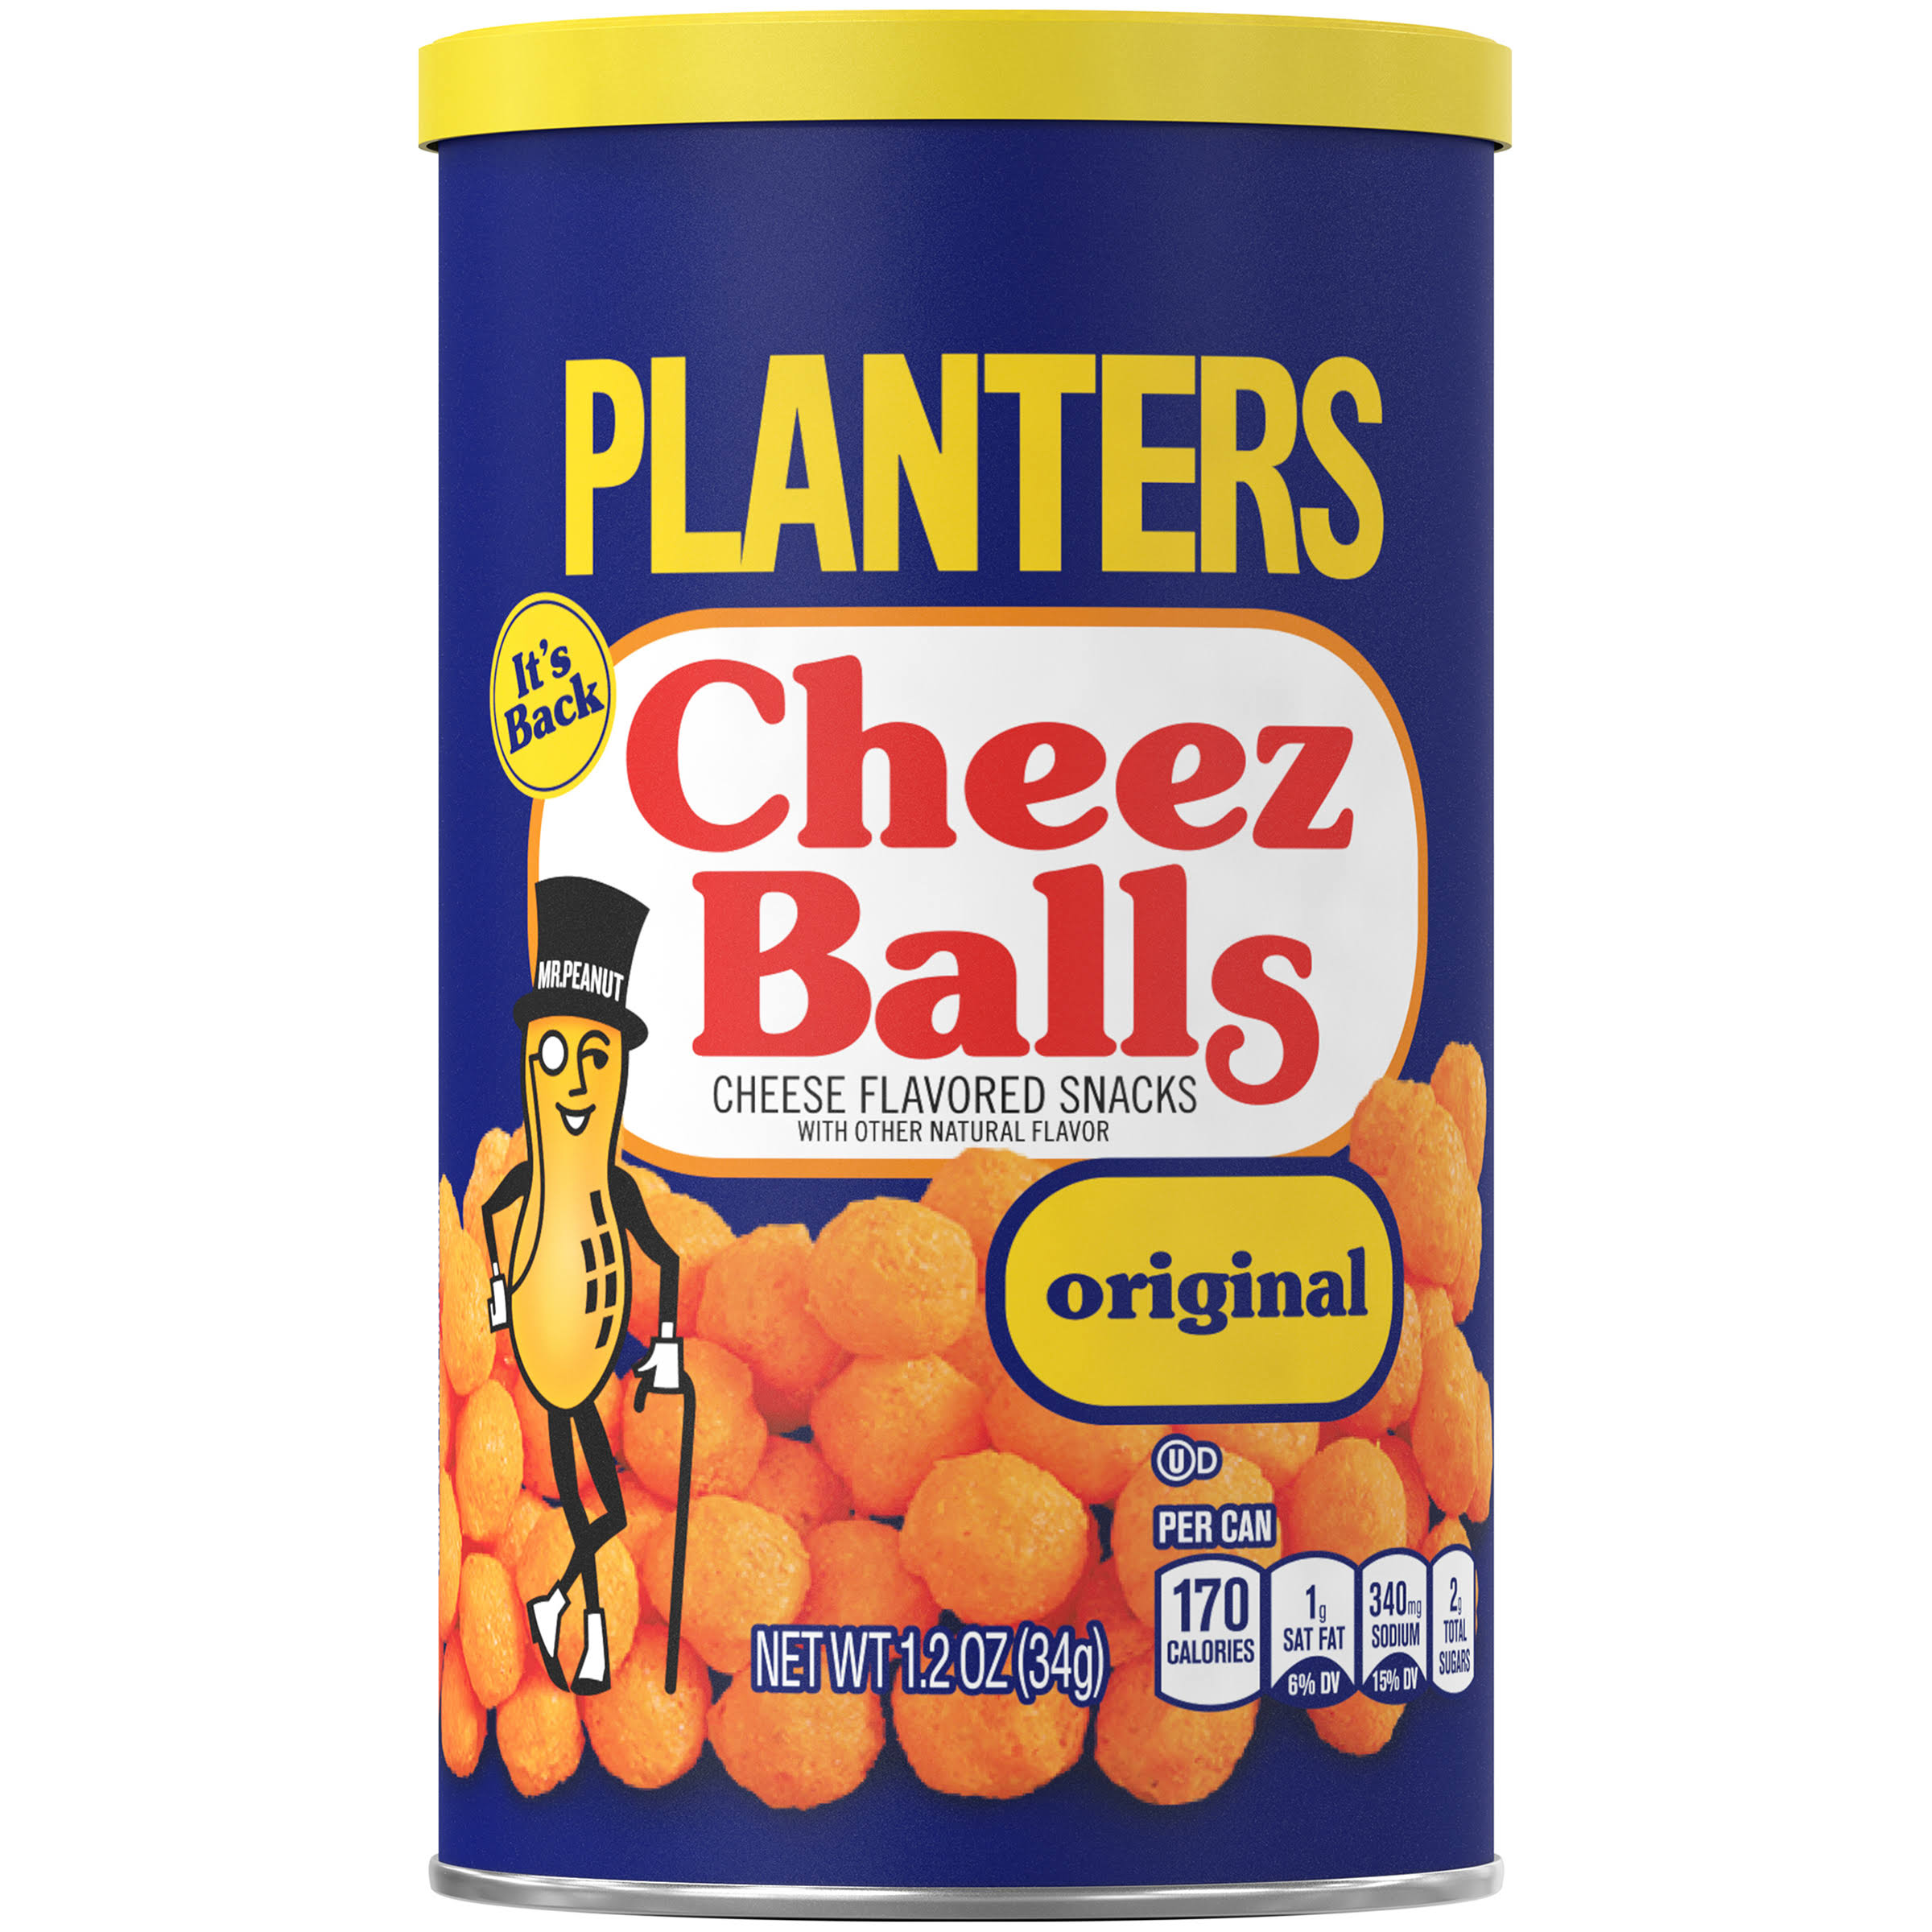 Planters Cheez Balls Original 1.2oz | By StockUpMarket